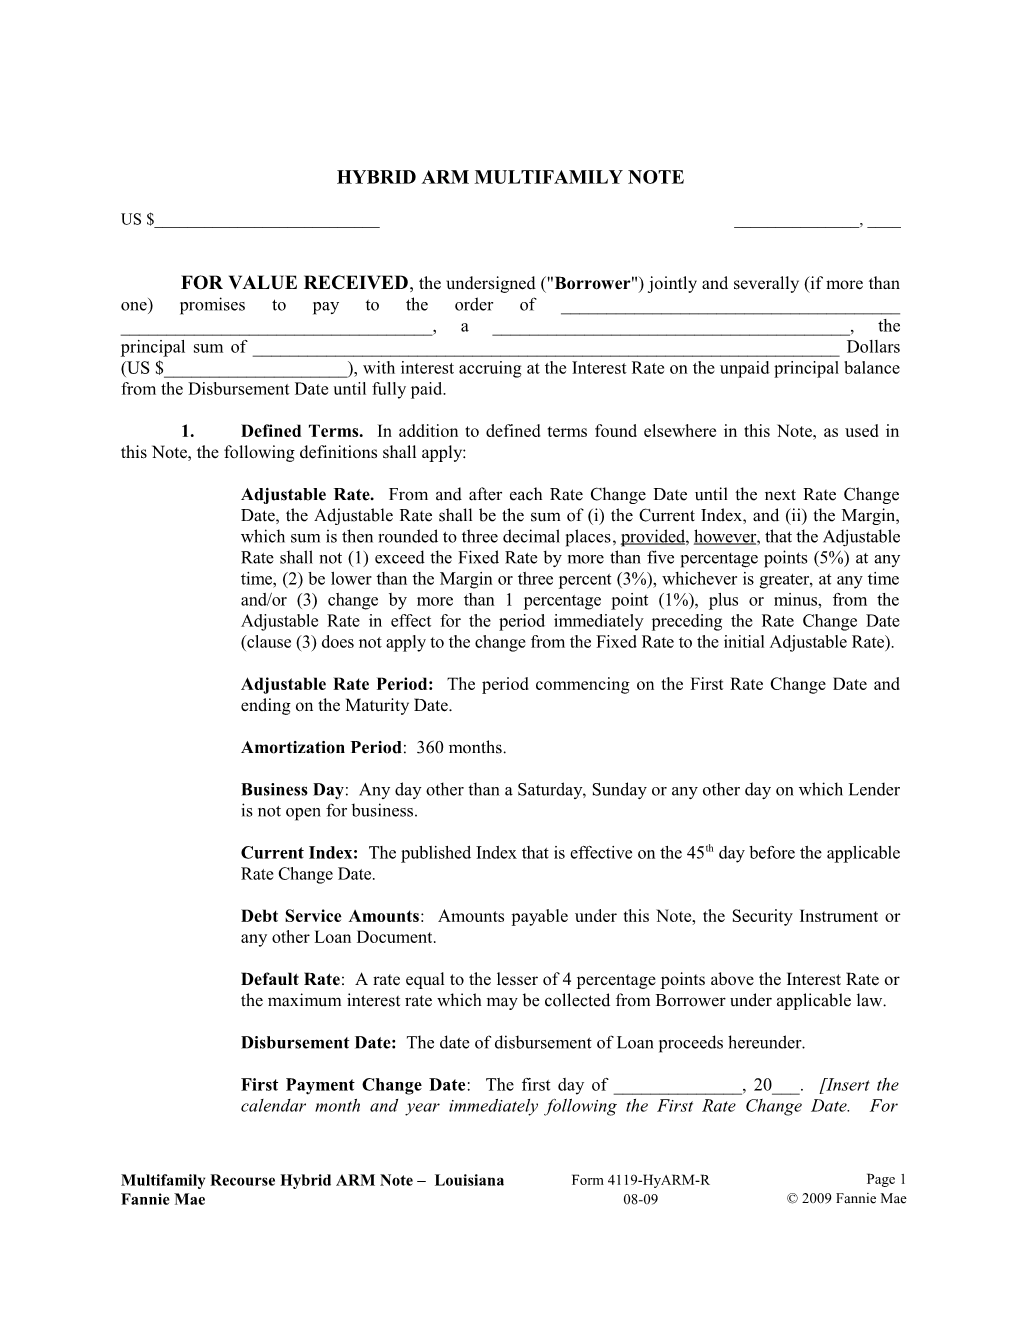 Multifamily Form 4119-Hyarm-R Louisiana